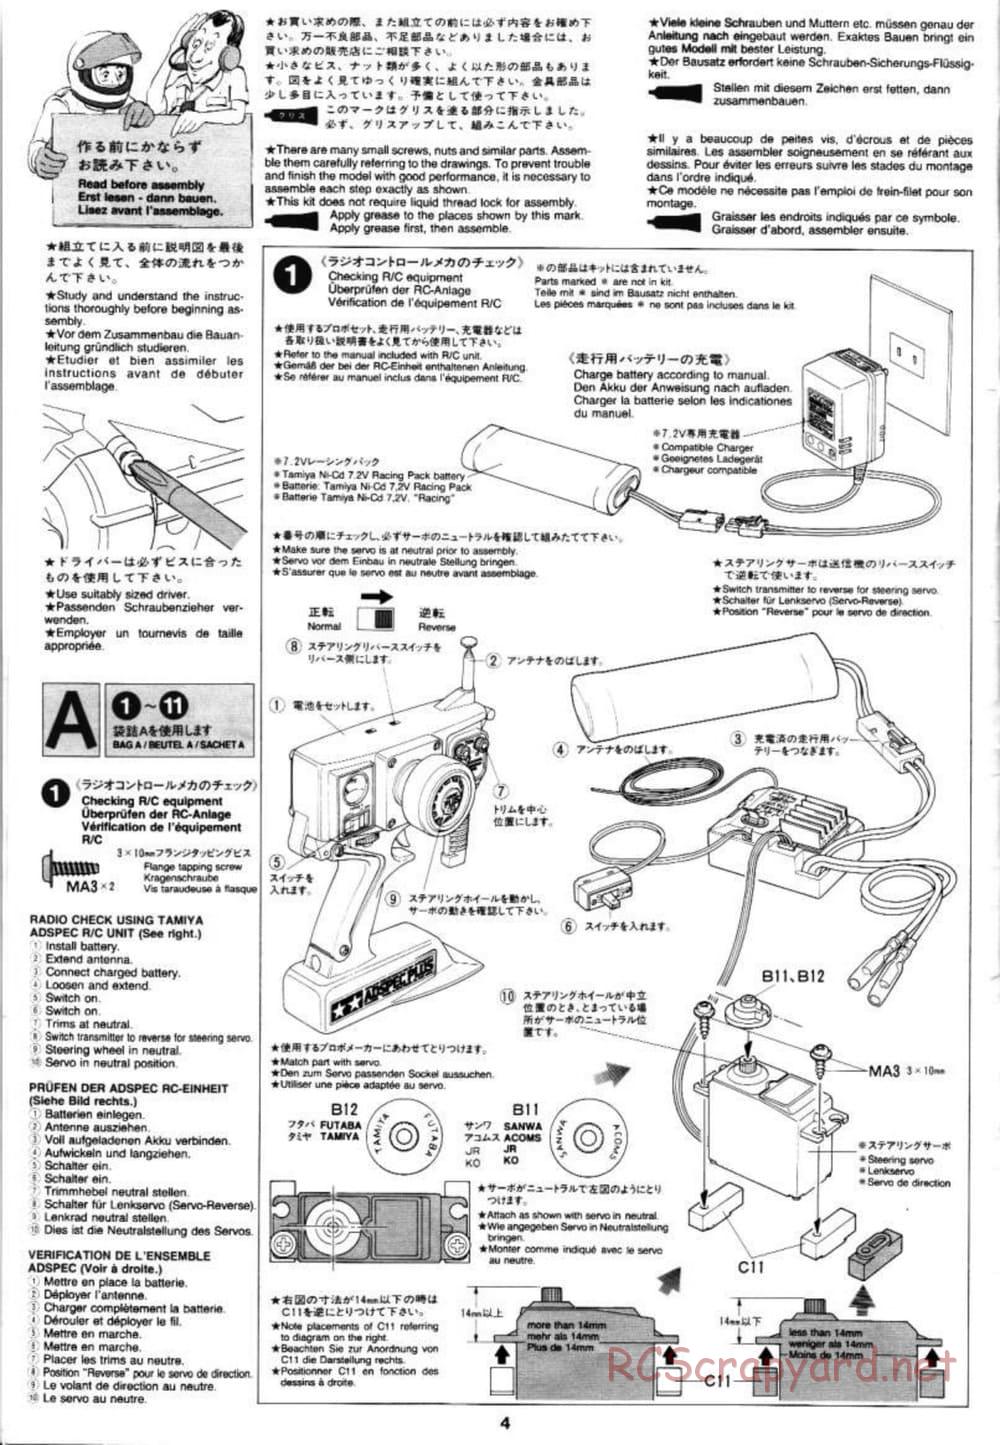 Tamiya - Peugeot 406 ST - TL-01 Chassis - Manual - Page 4